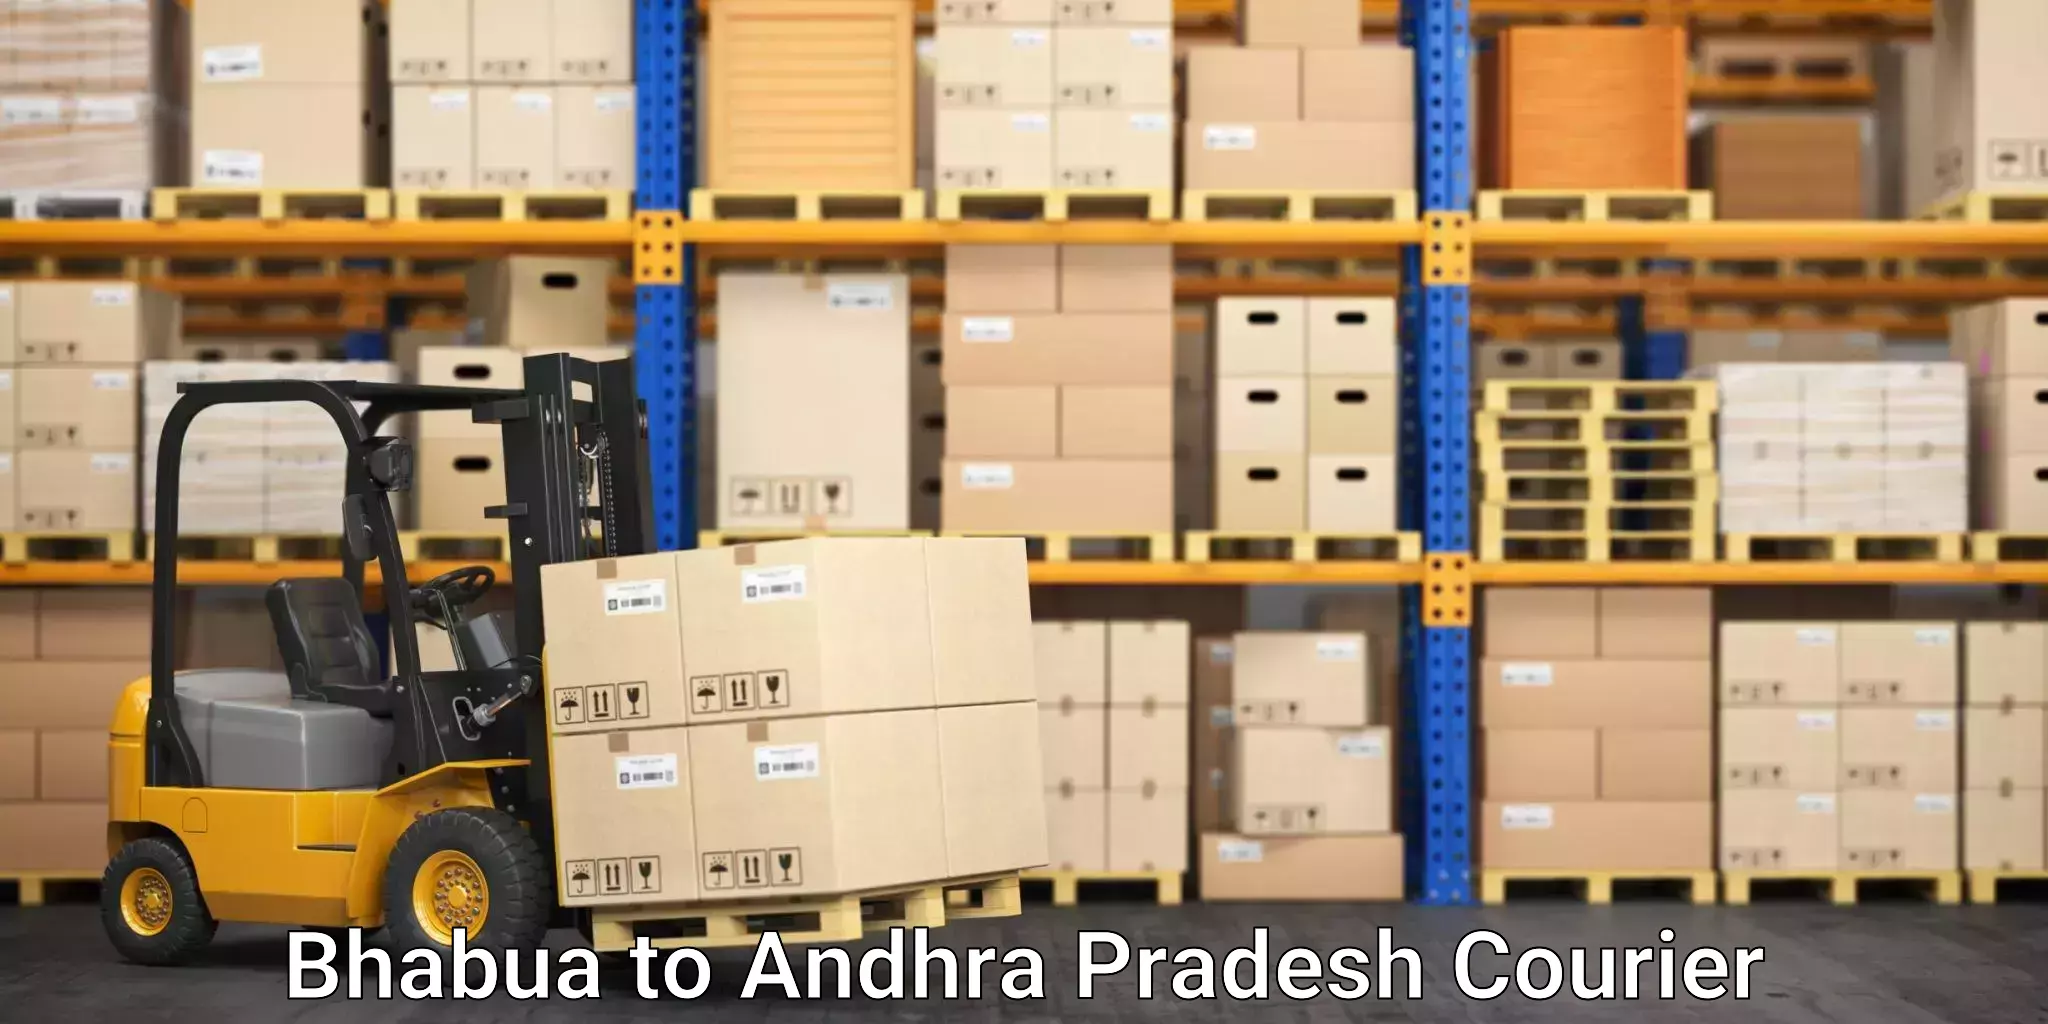 Furniture moving service in Bhabua to Andhra Pradesh